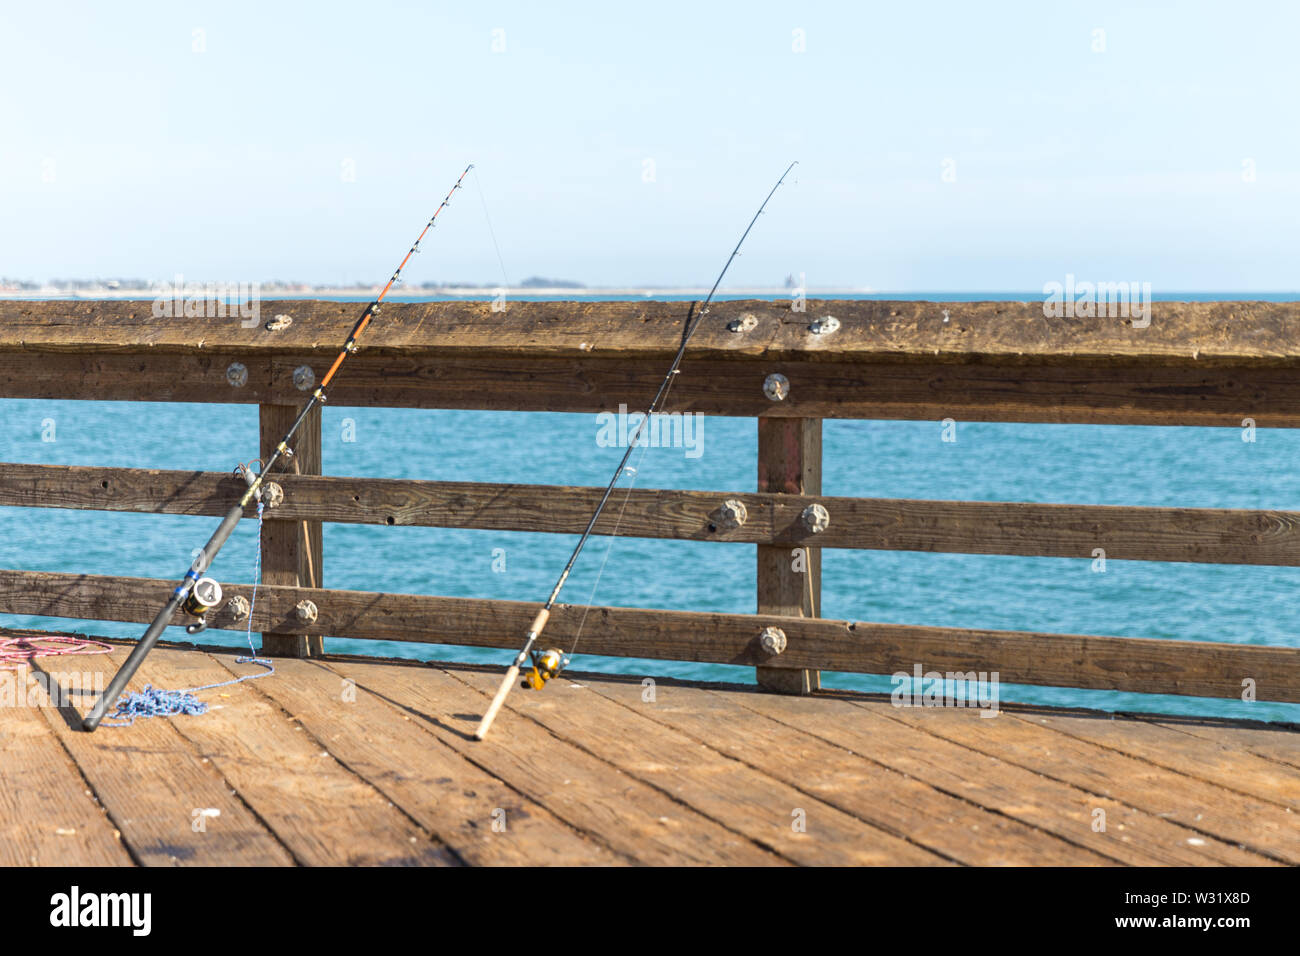 Fishing pole on pier stock image. Image of pursuit, carefree - 27225321